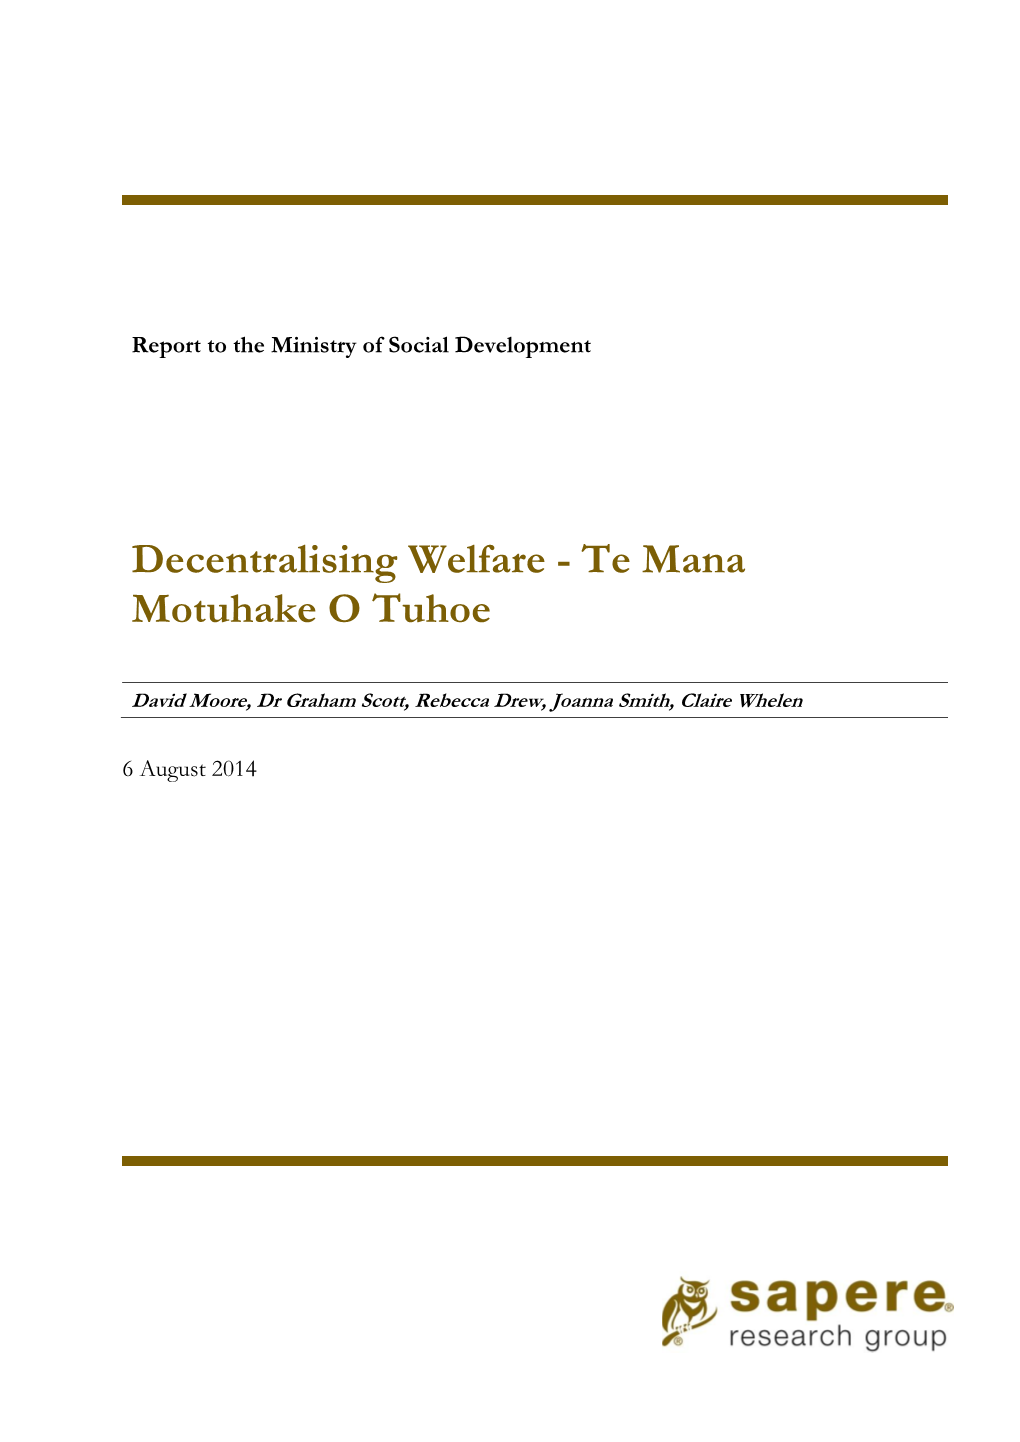 Decentralising Welfare - Te Mana Motuhake O Tuhoe